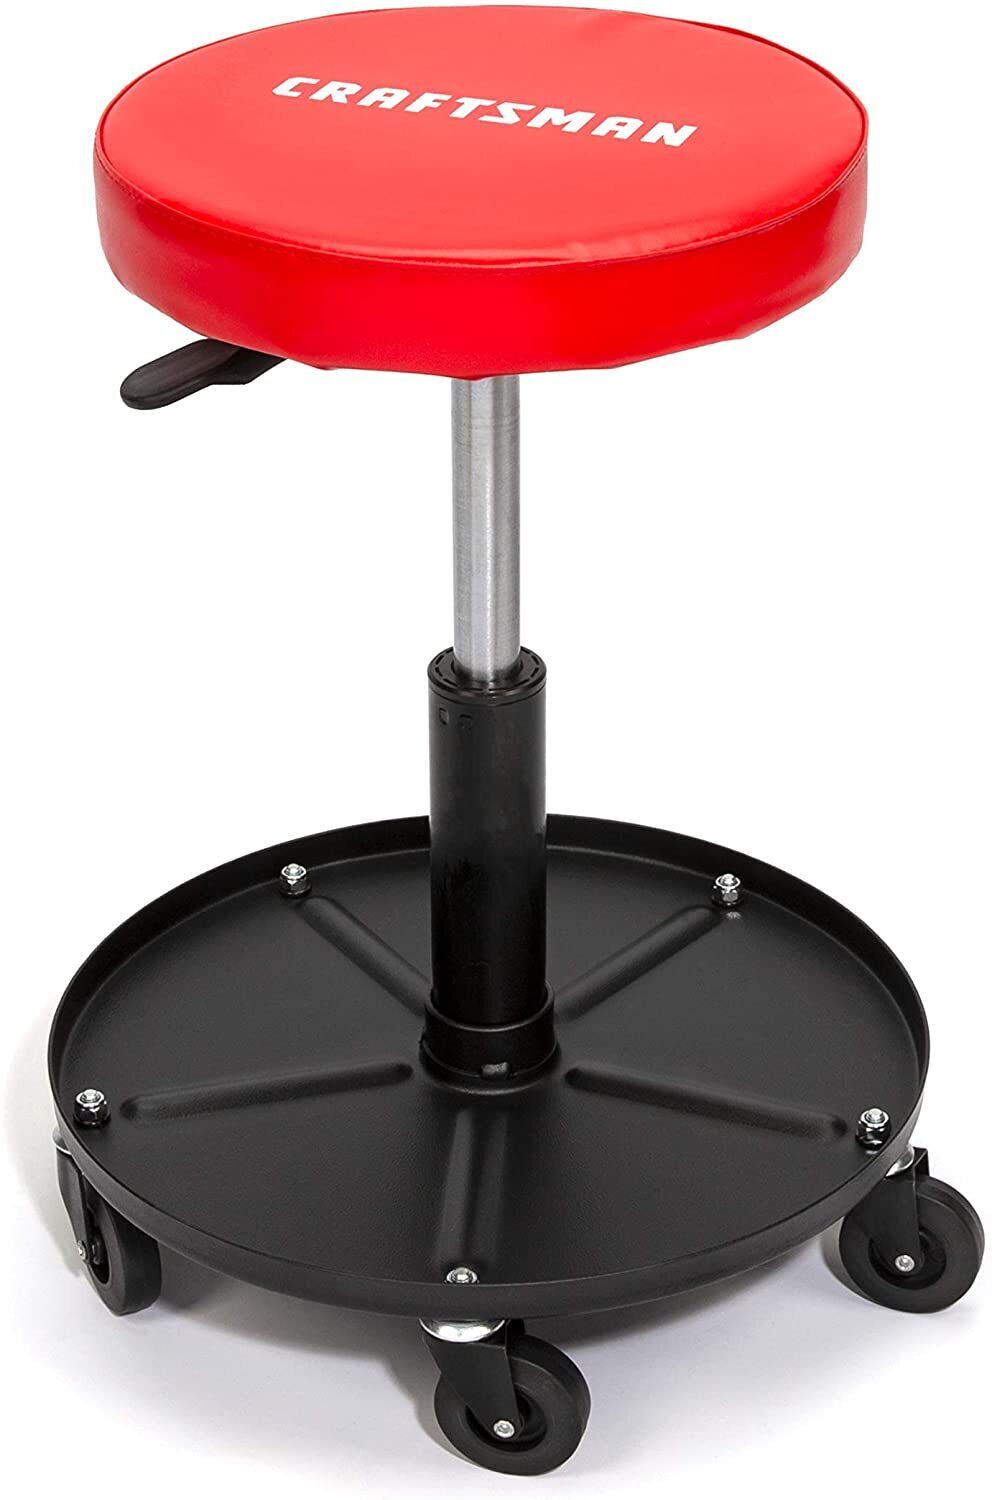 Red and black adjustable garage stool